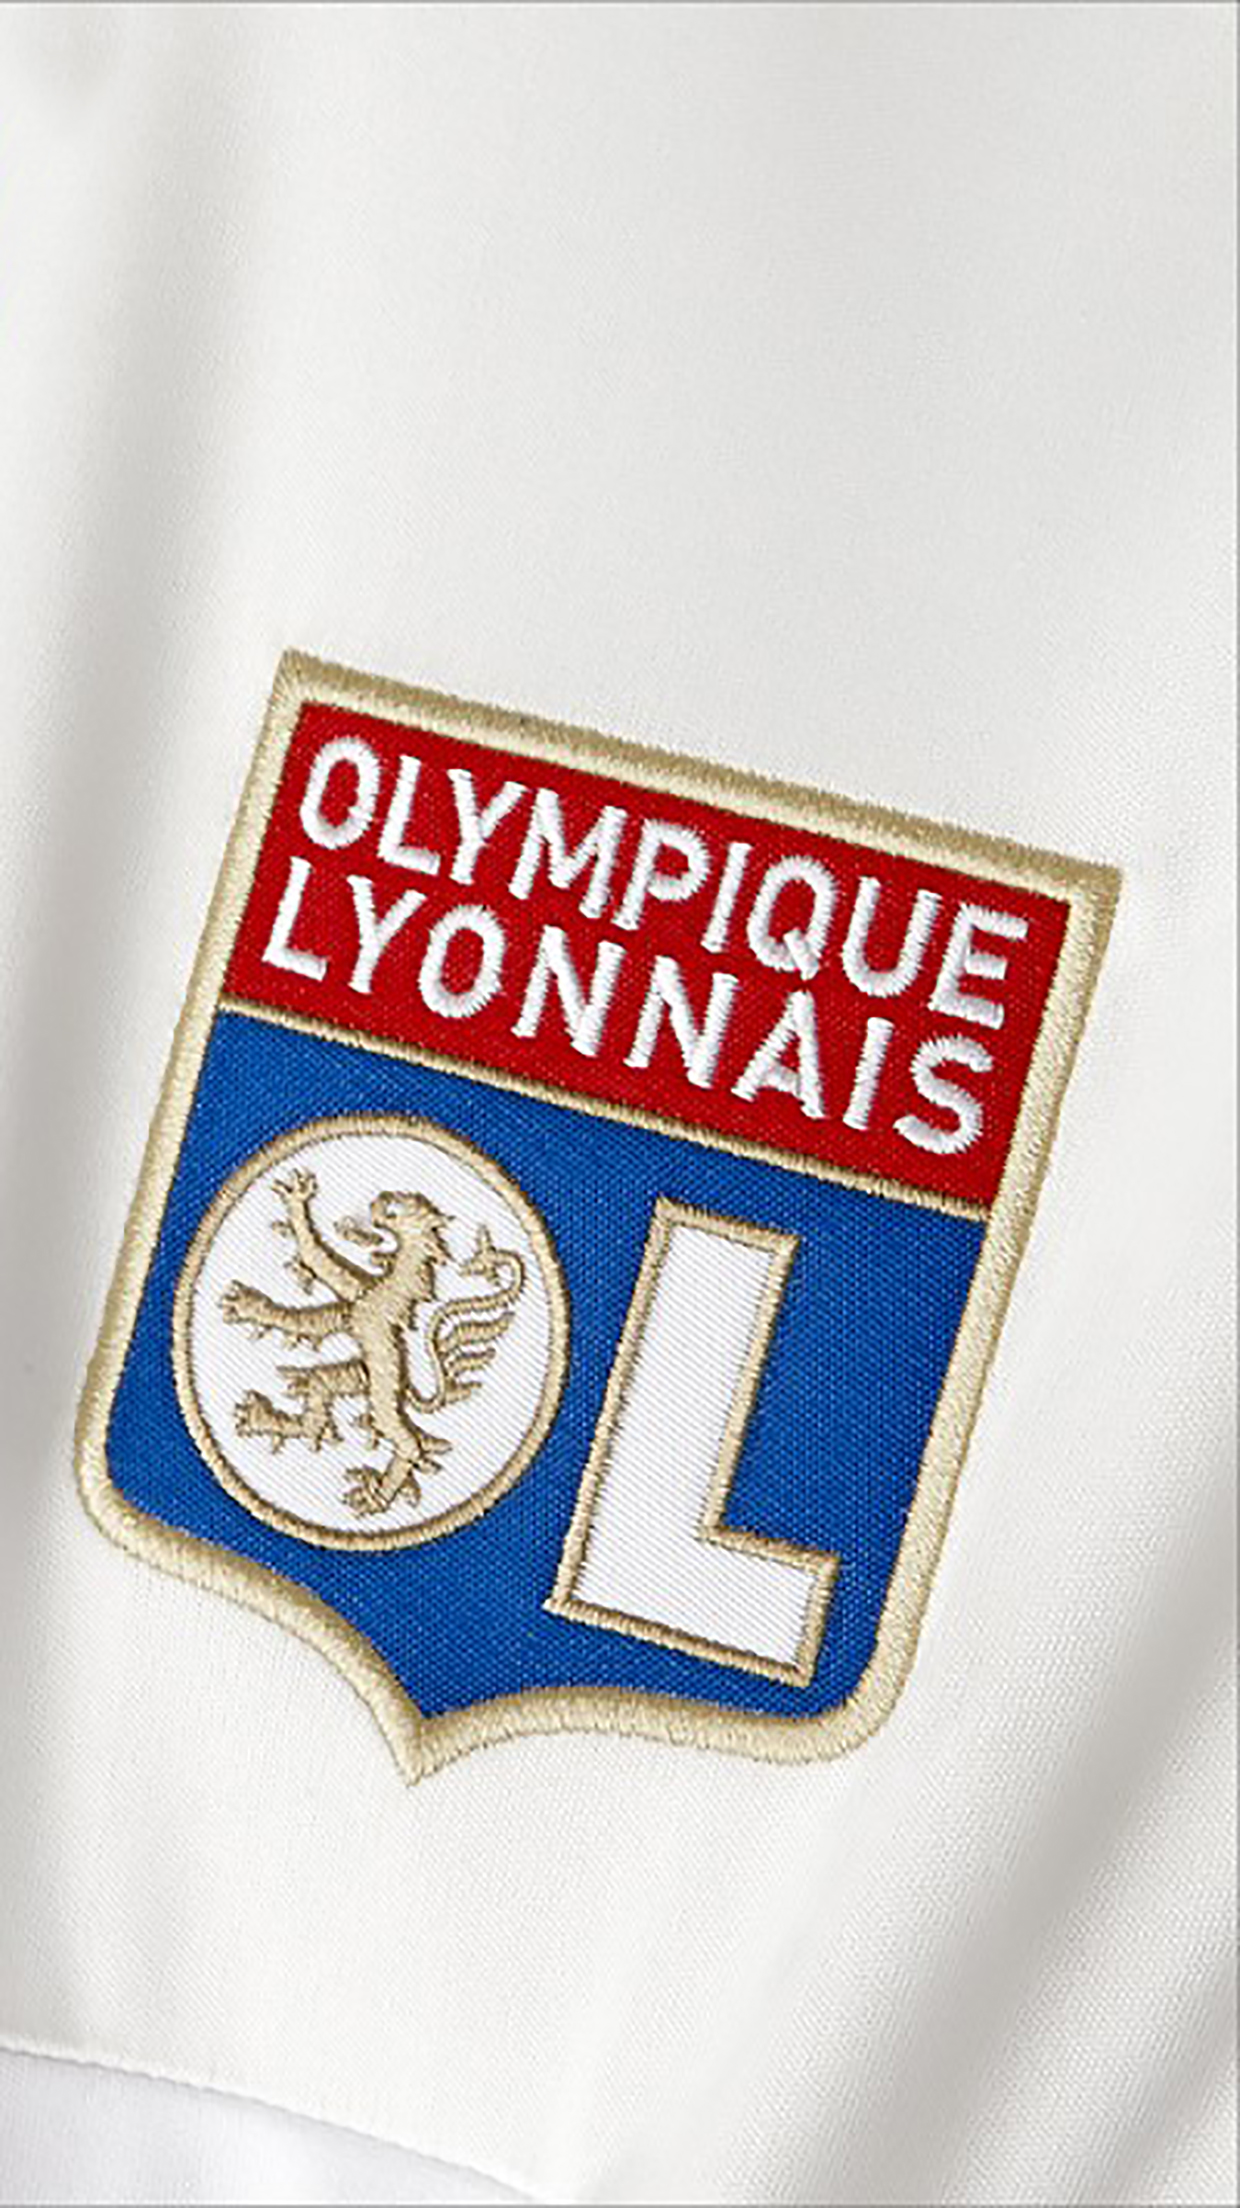 Olympique Lyonnais Logo Wallpaper For iPhone X